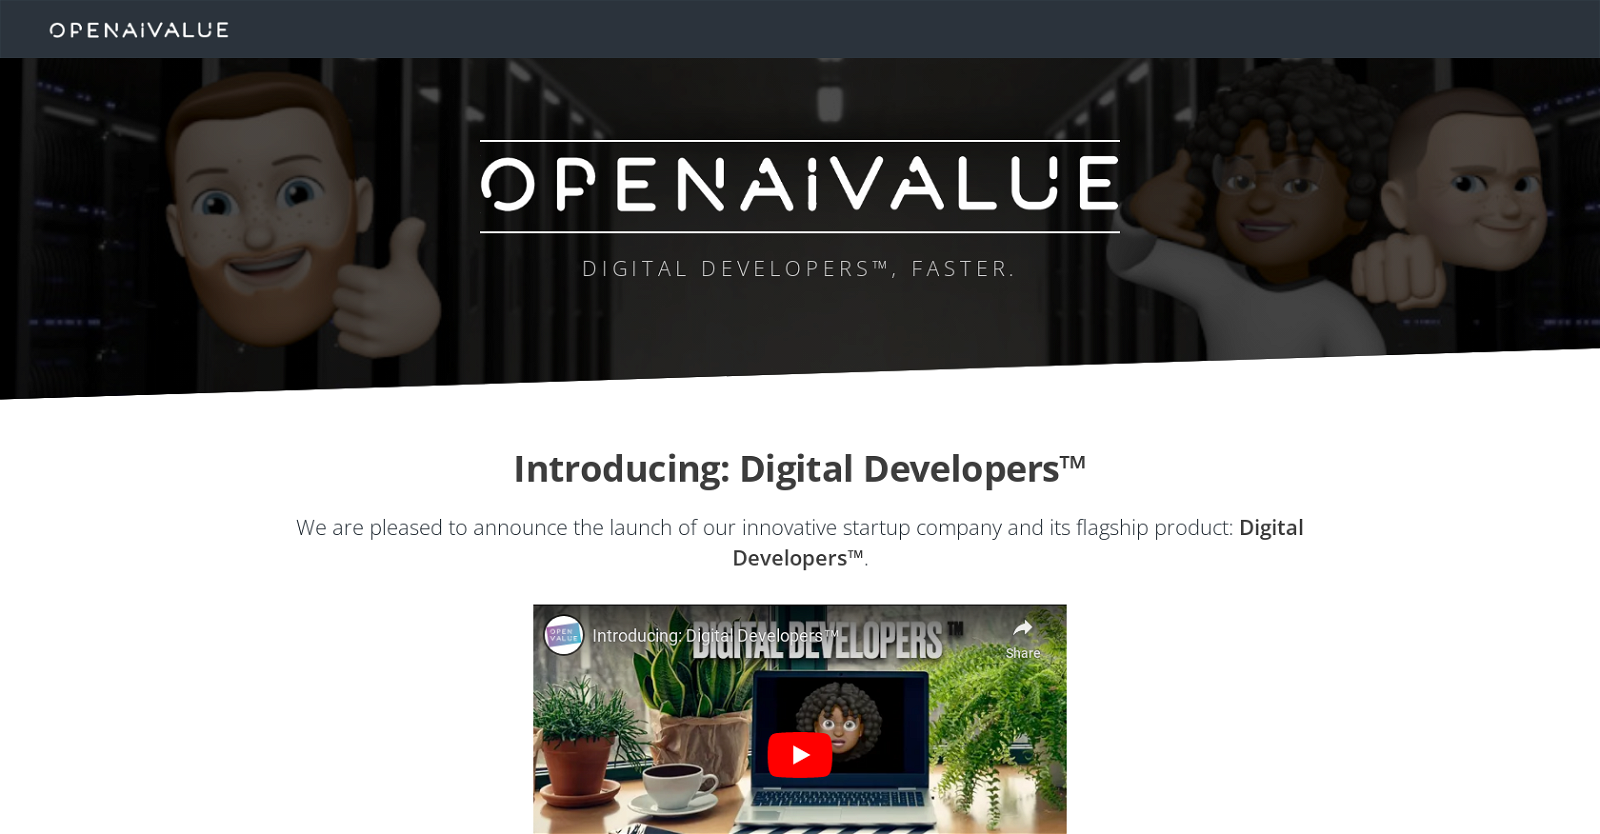 OpenAIvalue website